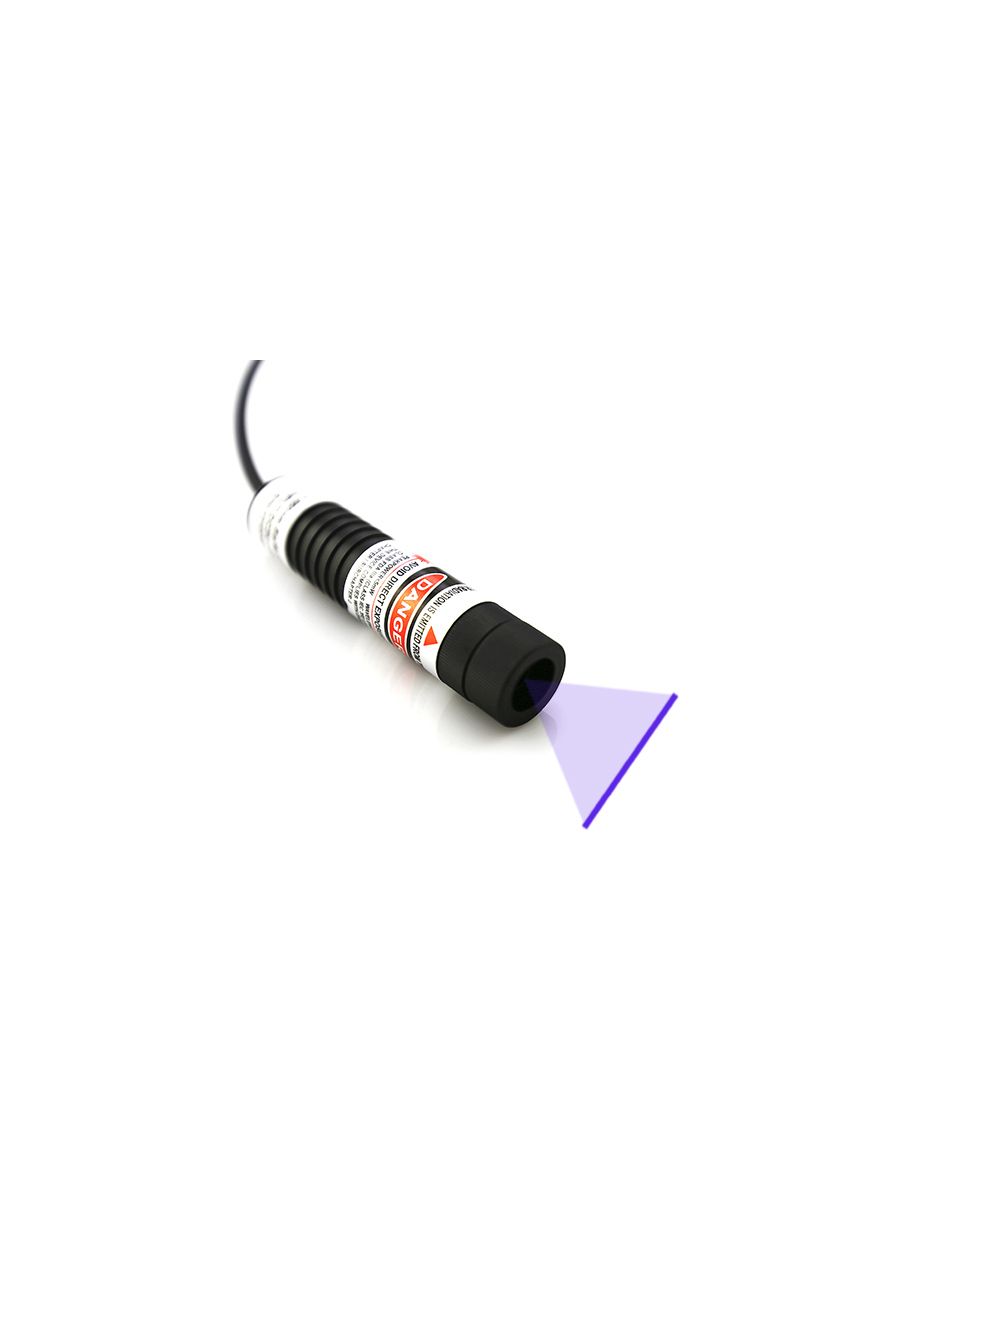 https://www.berlinlasers.com/pub/media/catalog/product/cache/36982d9b91ab55270da3ef78c043733c/4/0/405nm-50mw-80mw-violet-line-laser-module-1.jpg